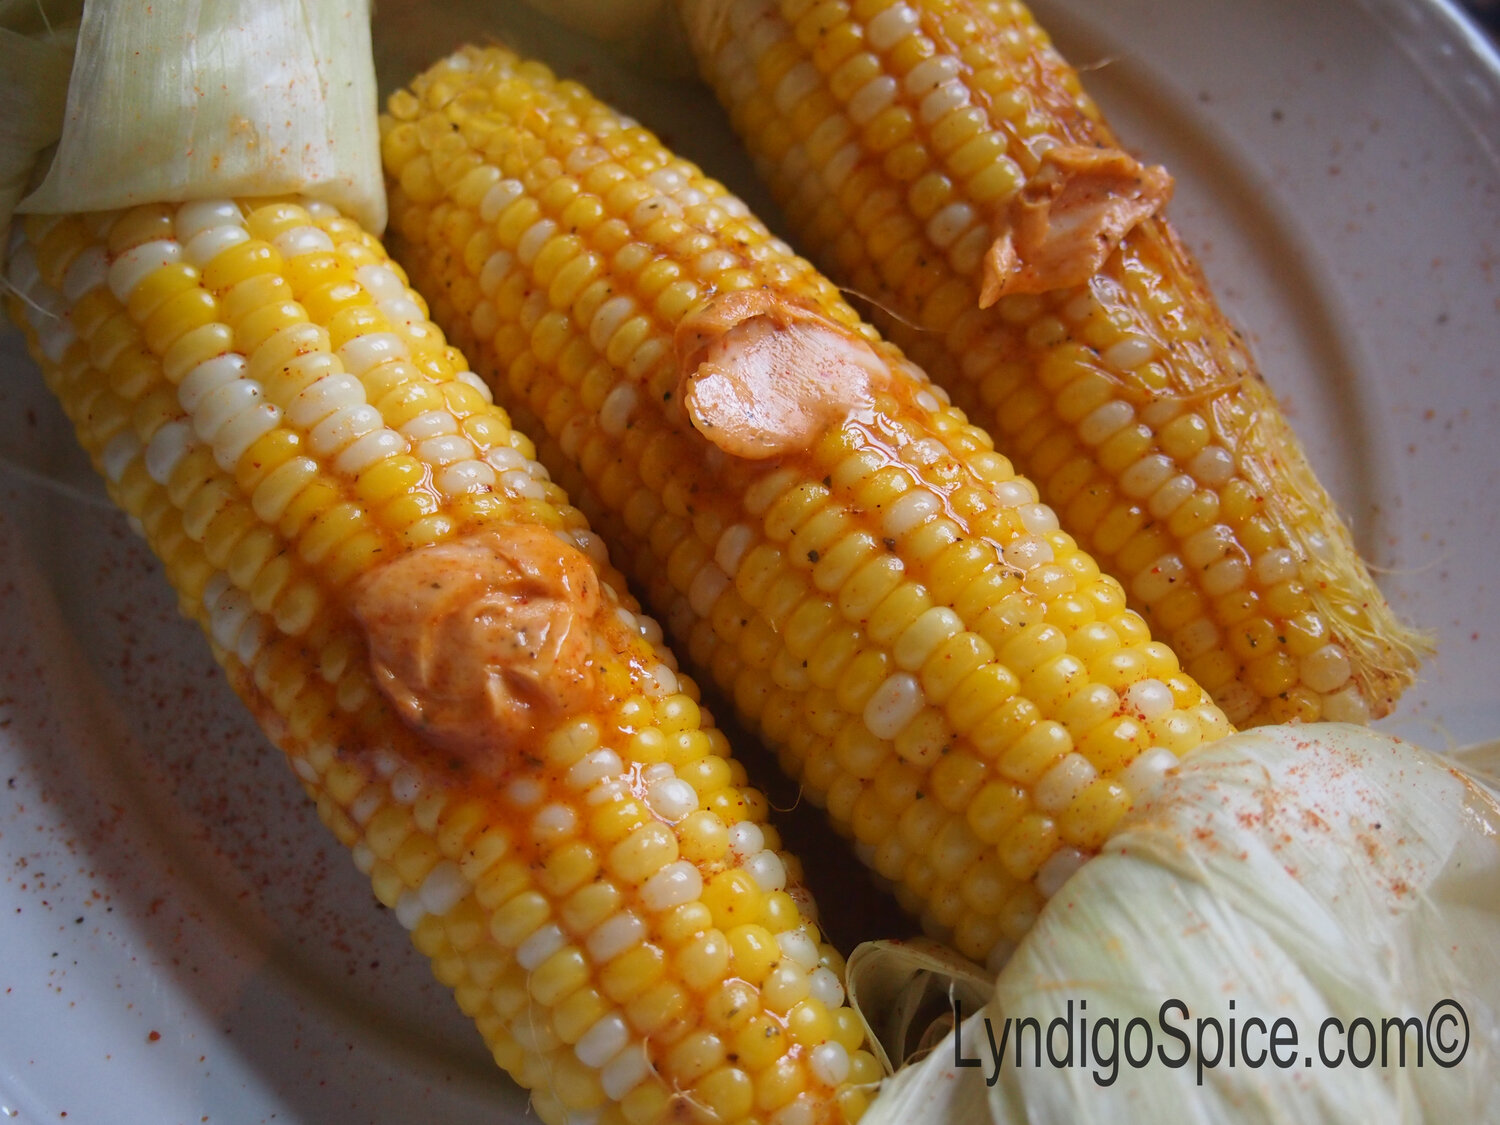 Grilled Summer Corn with Lyndigo Spice® Compound Butter